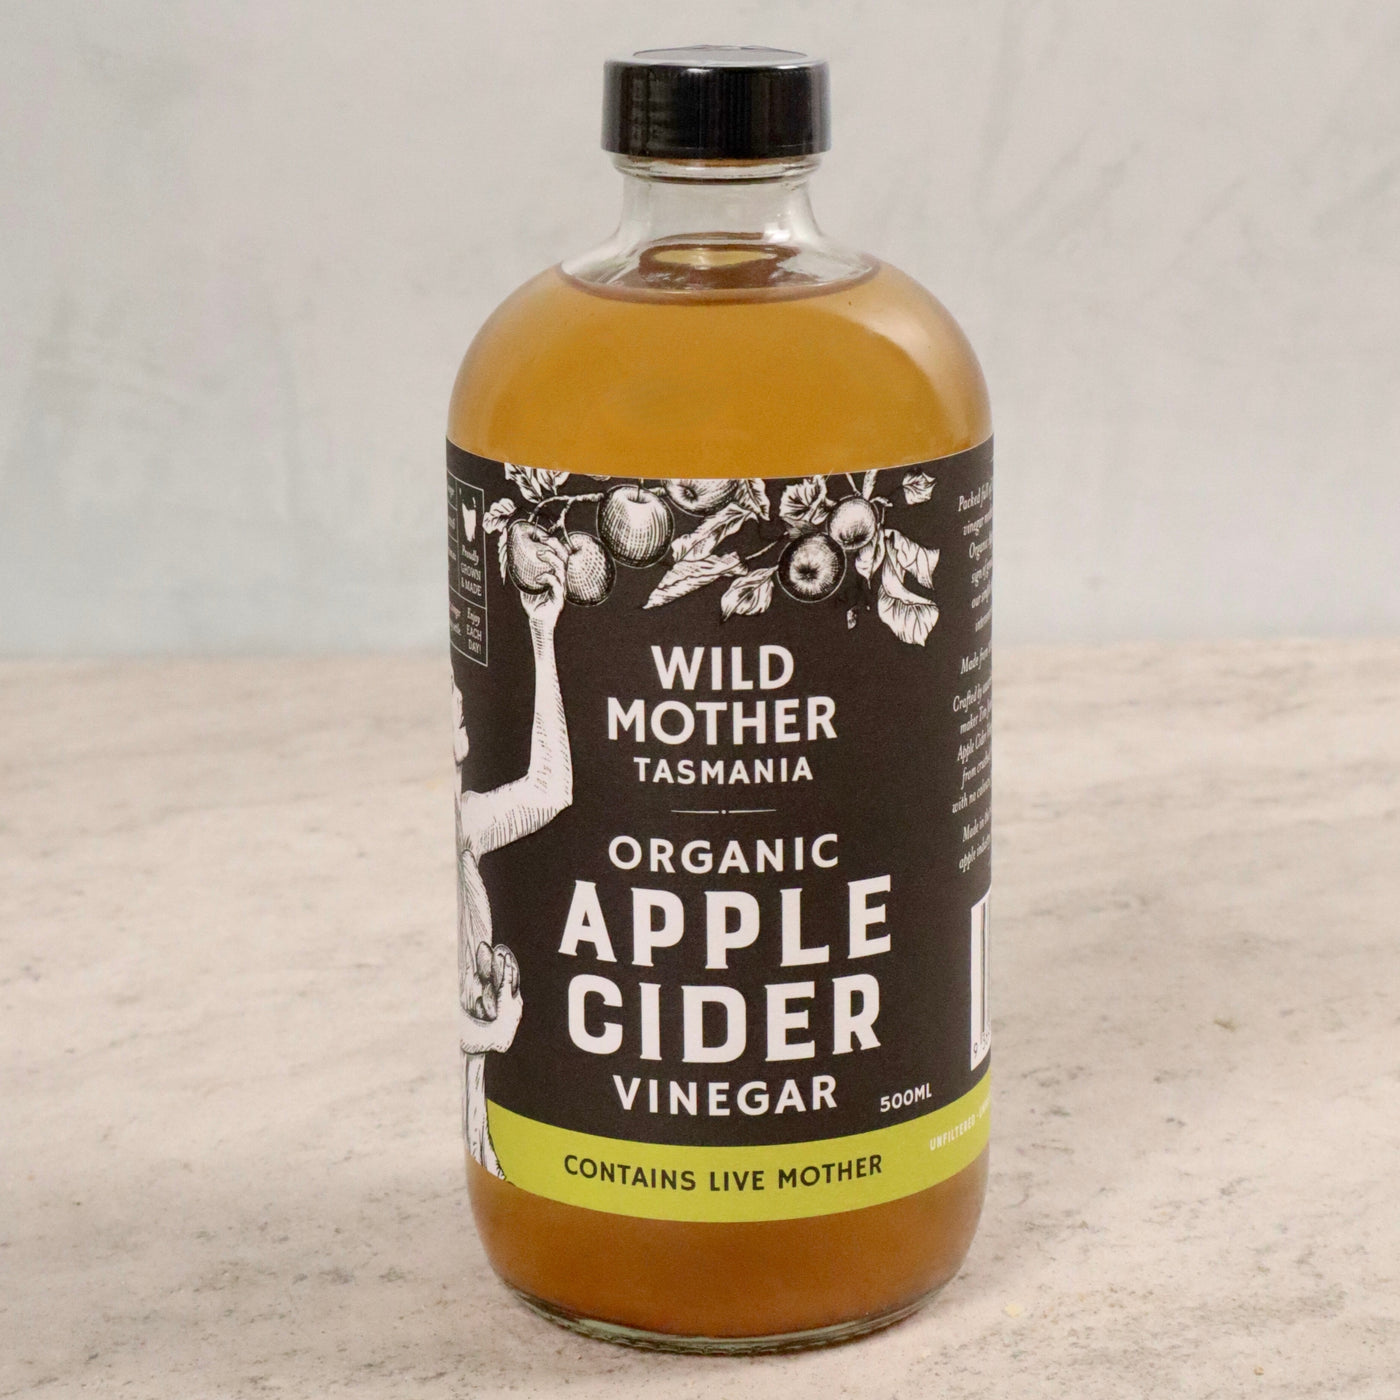 Wild Mother Tasmania - Organic Apple Cider Vinegar